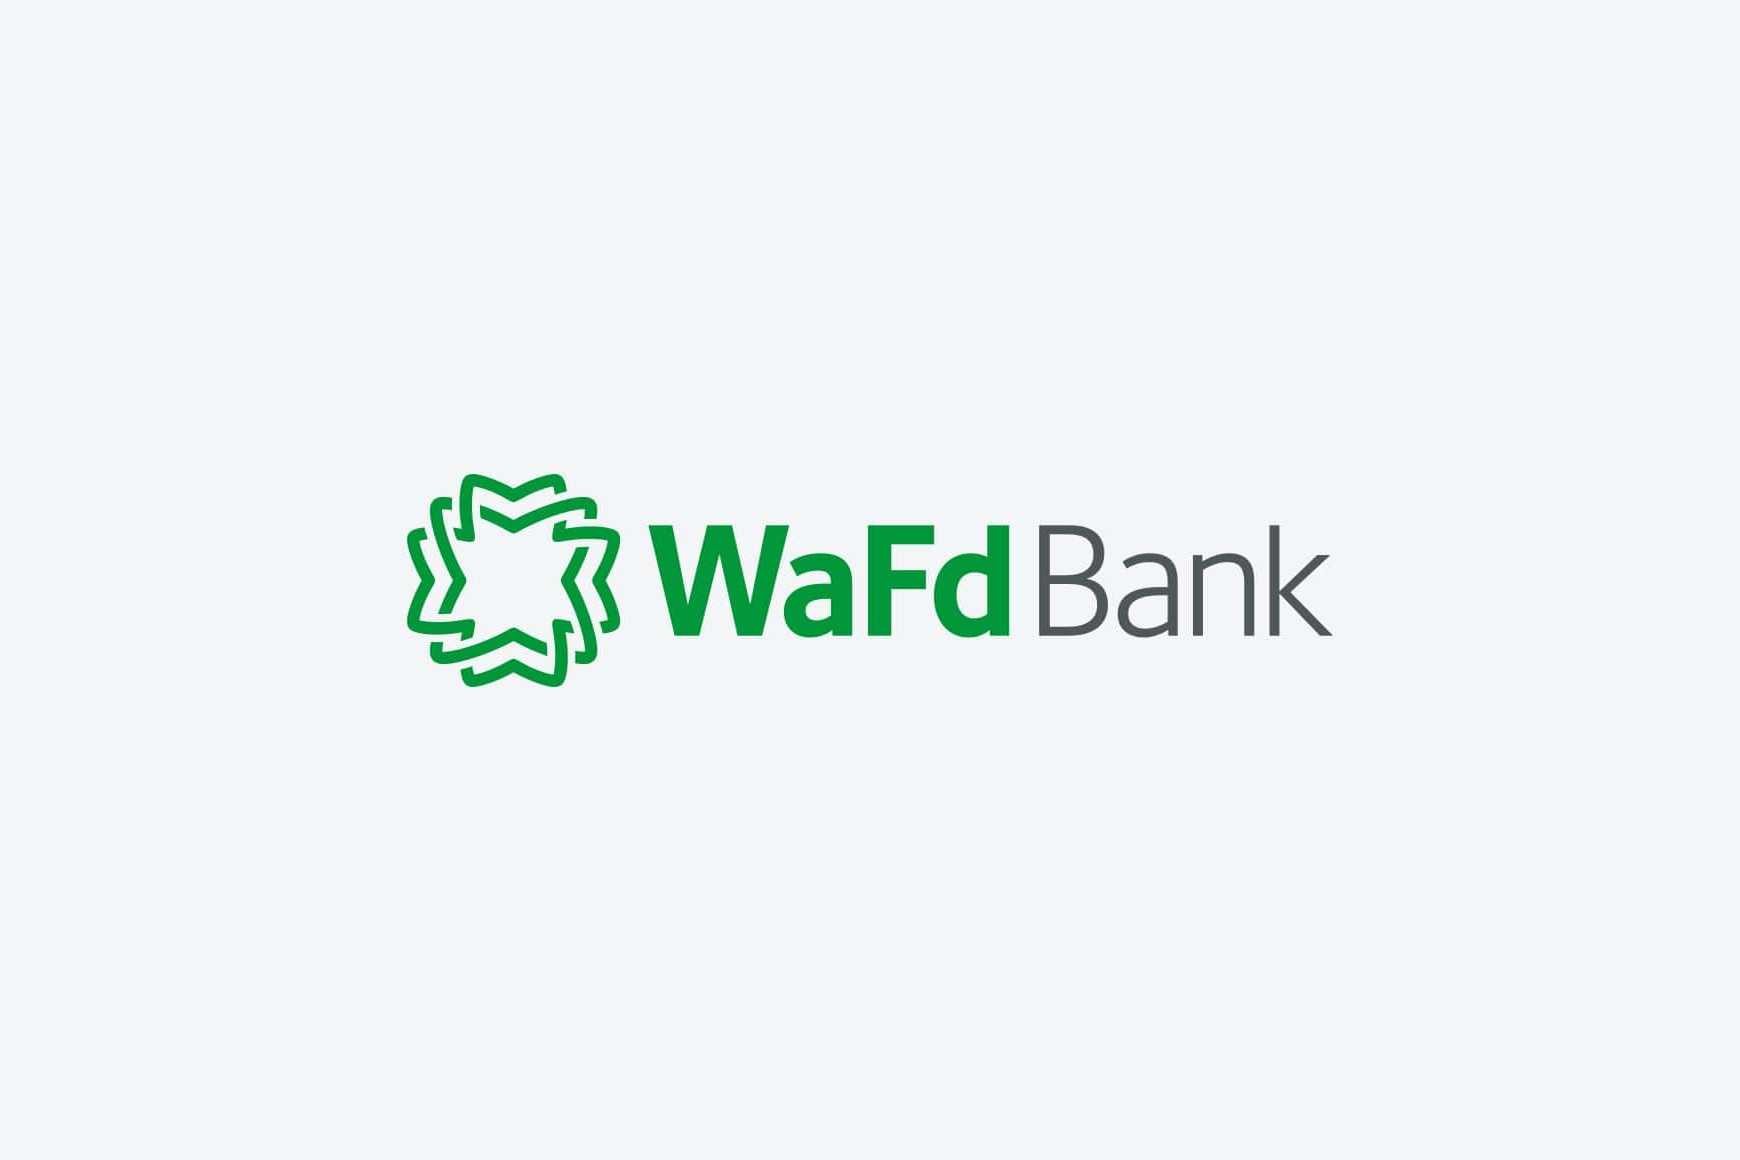 Wafdbank Logo Image